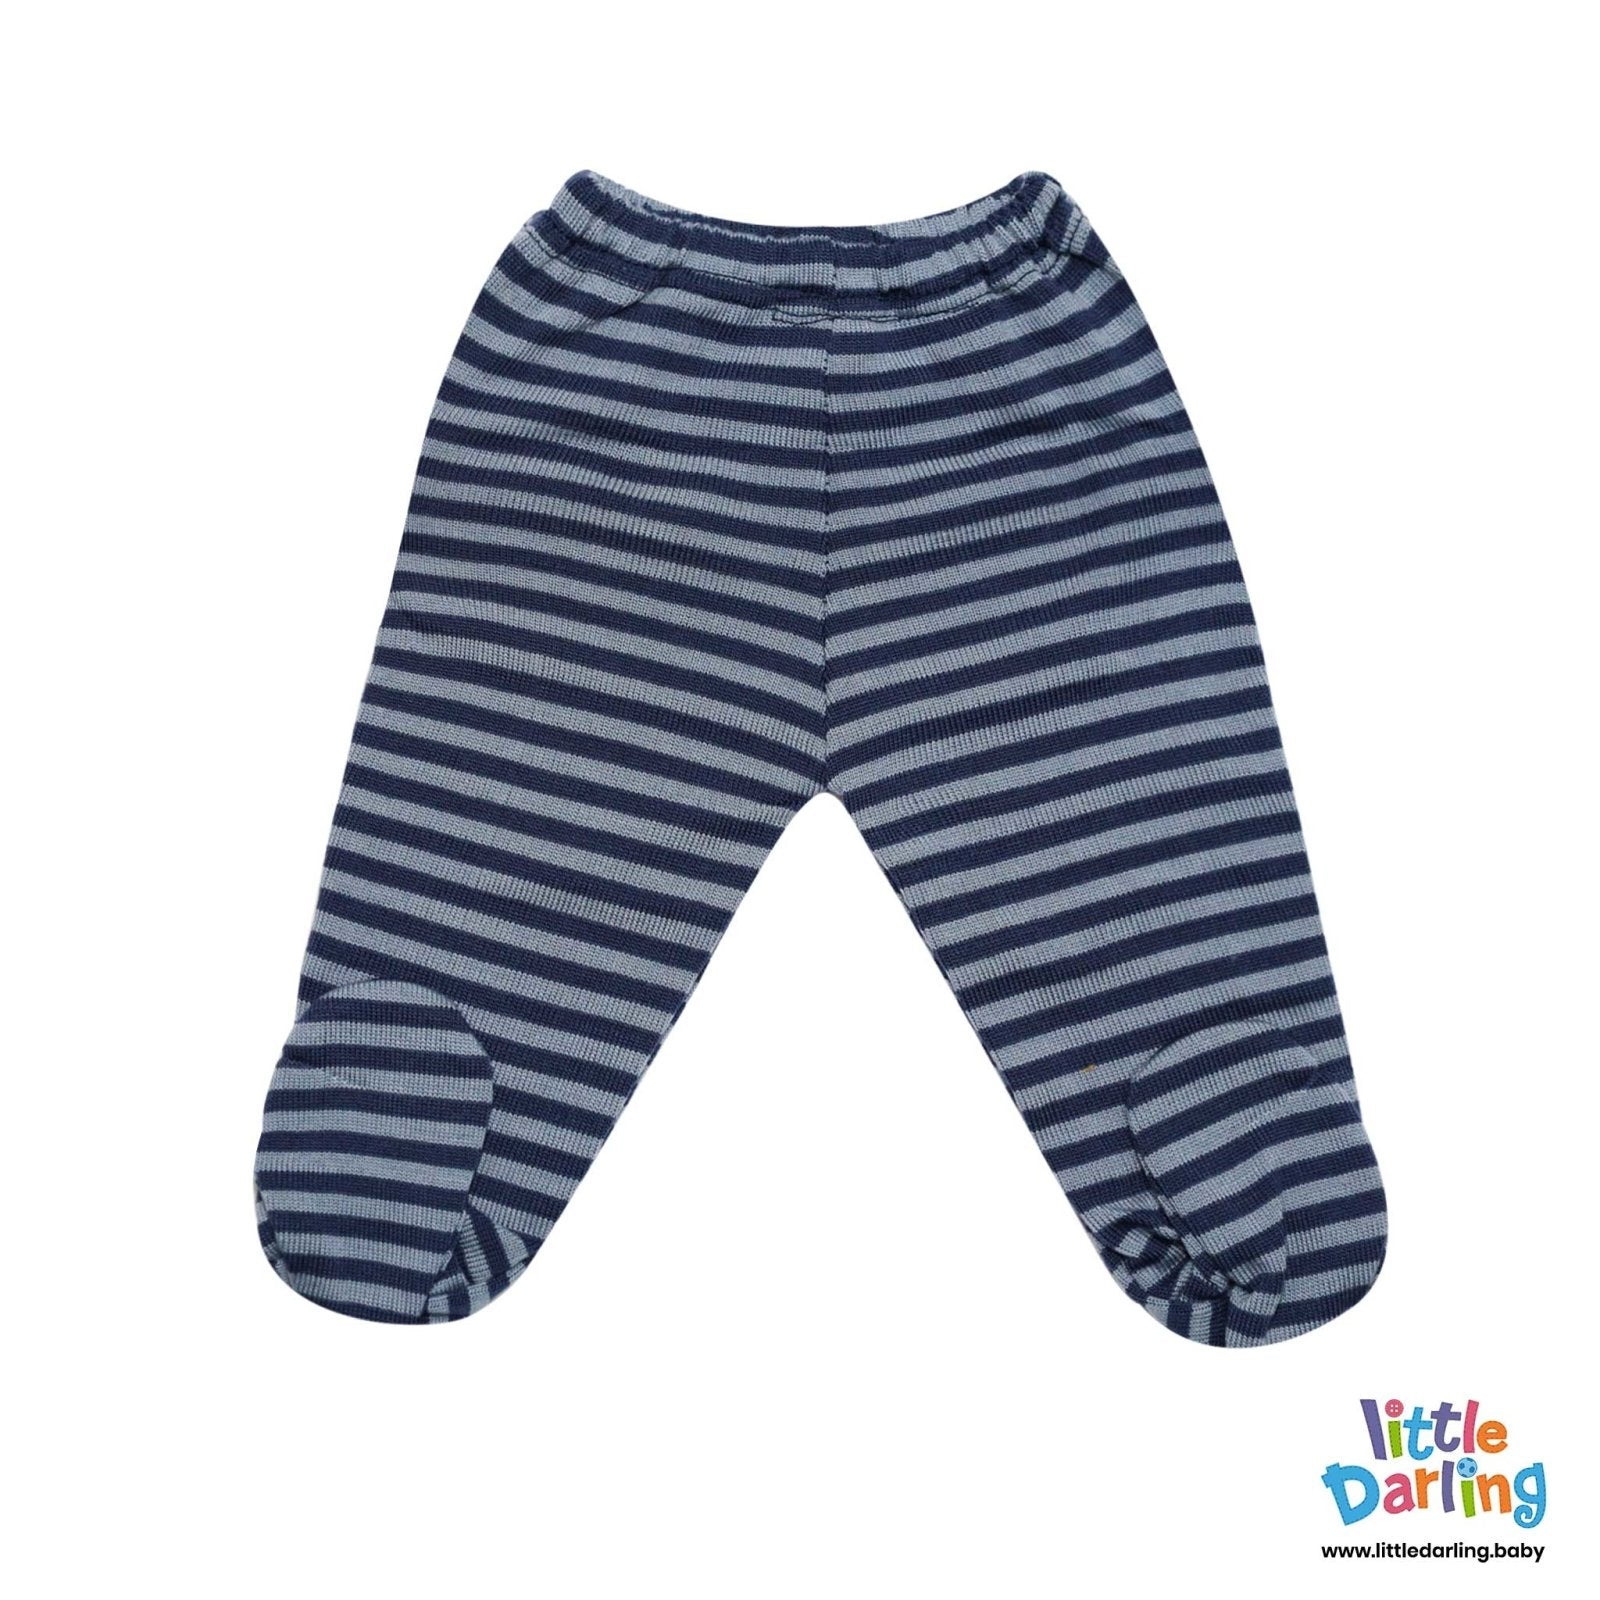 4 Pcs Woolen Gift Set Grey & Navy Blue Stripes by Little Darling